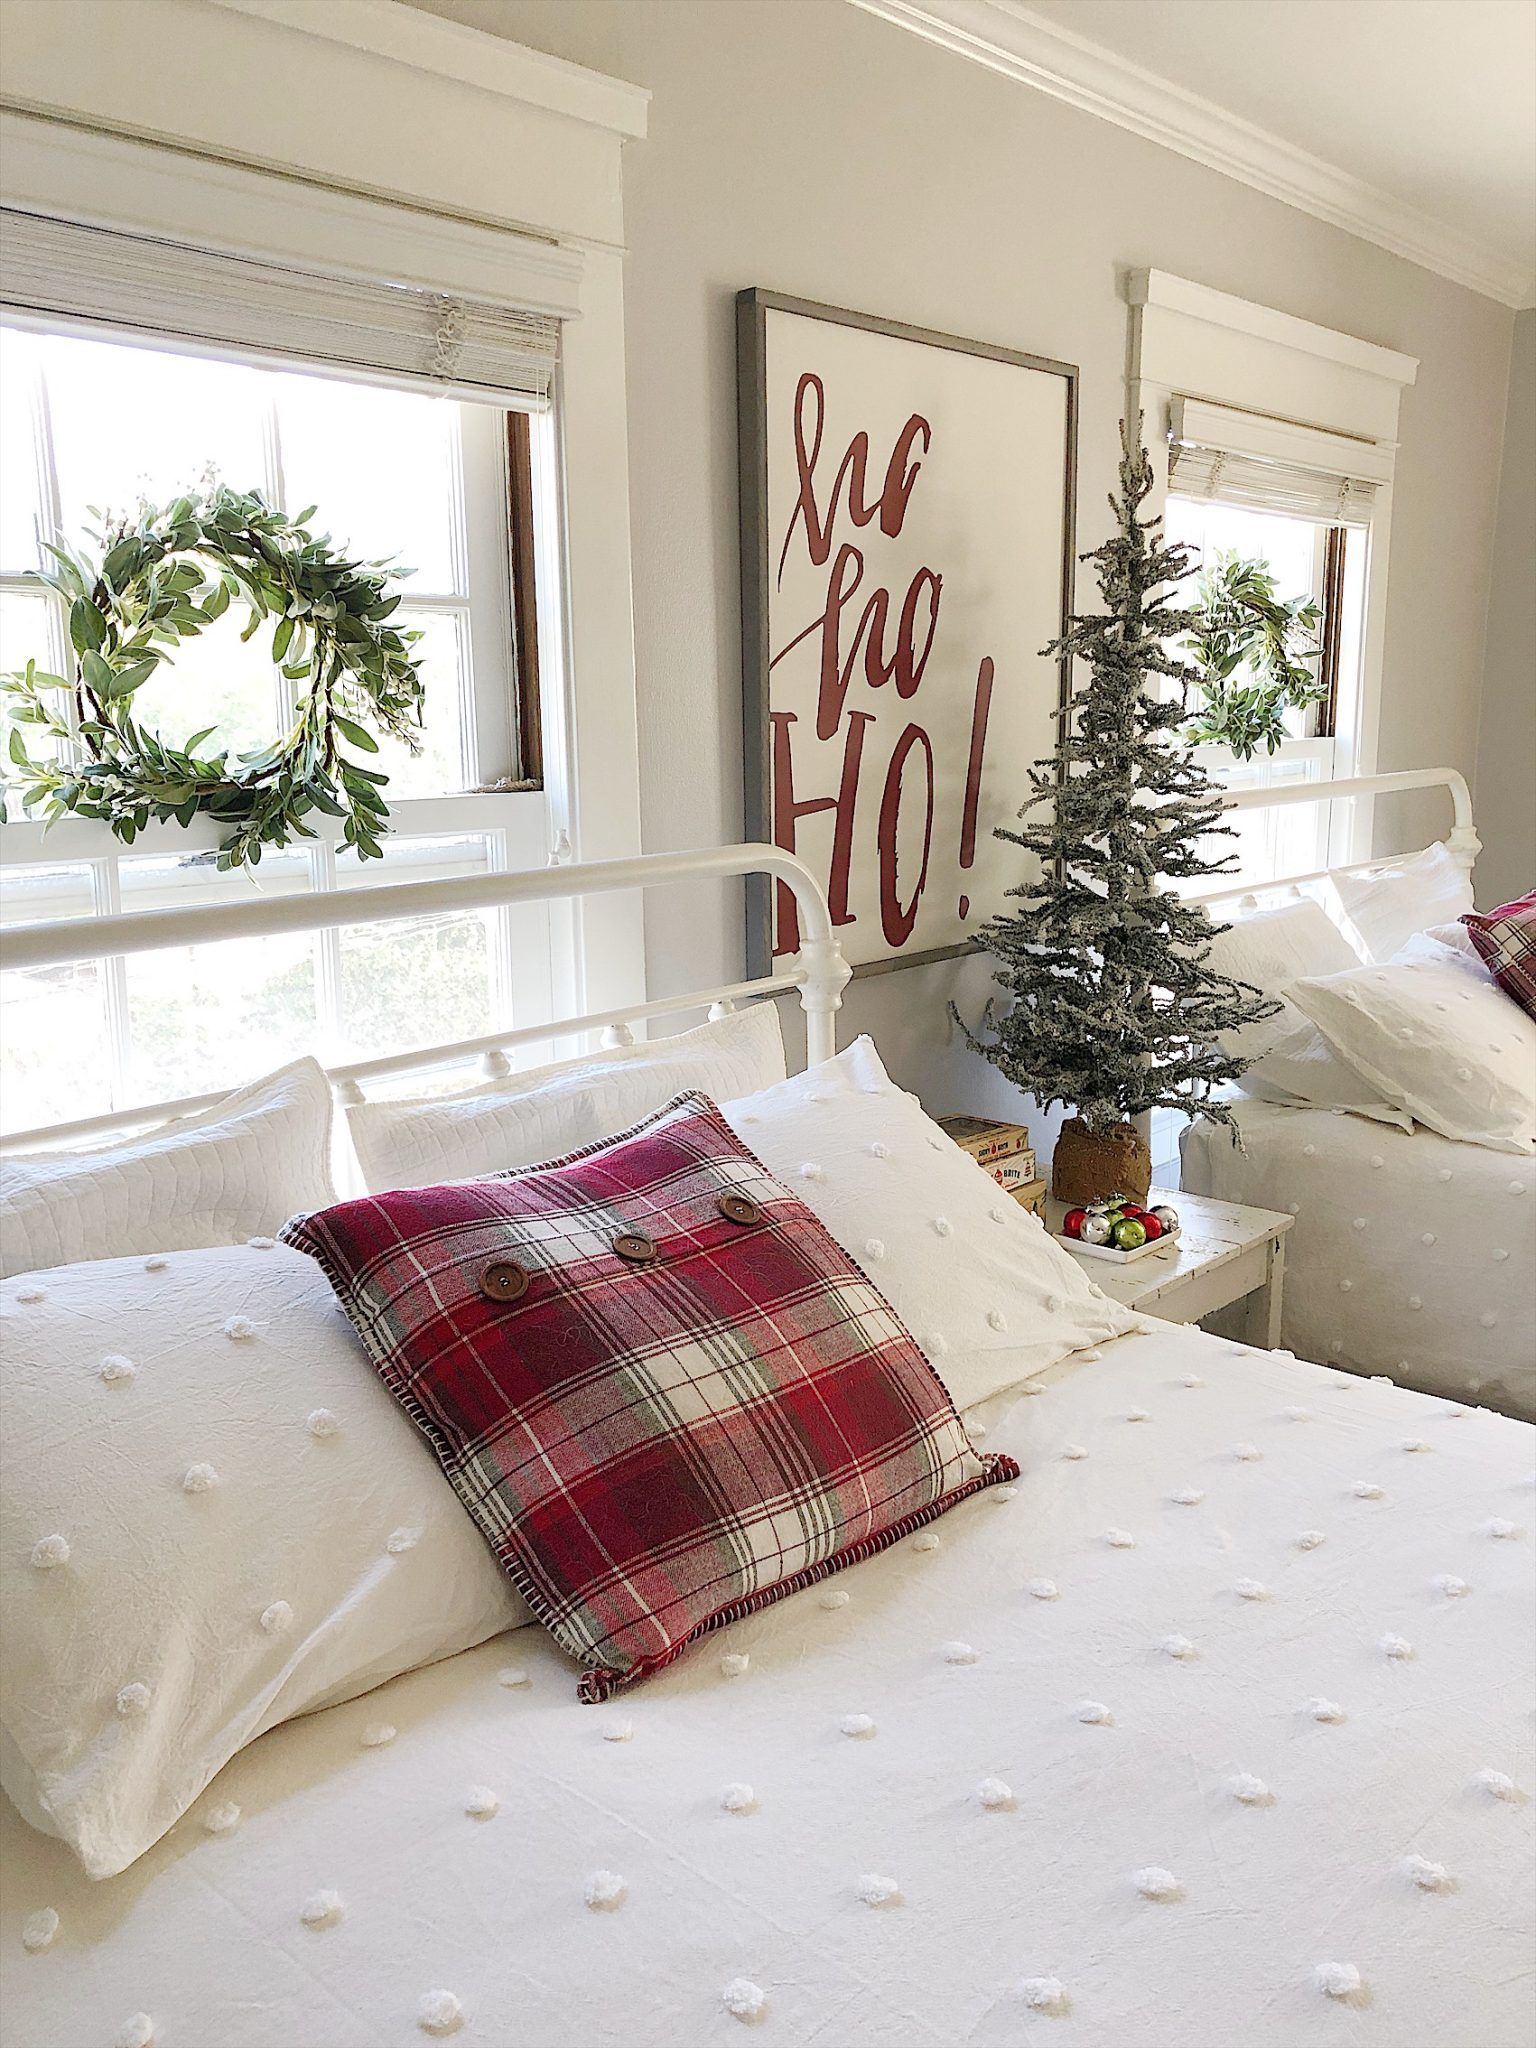 25 Best Christmas Bedroom Decor Ideas - DIY Bedroom Decorations